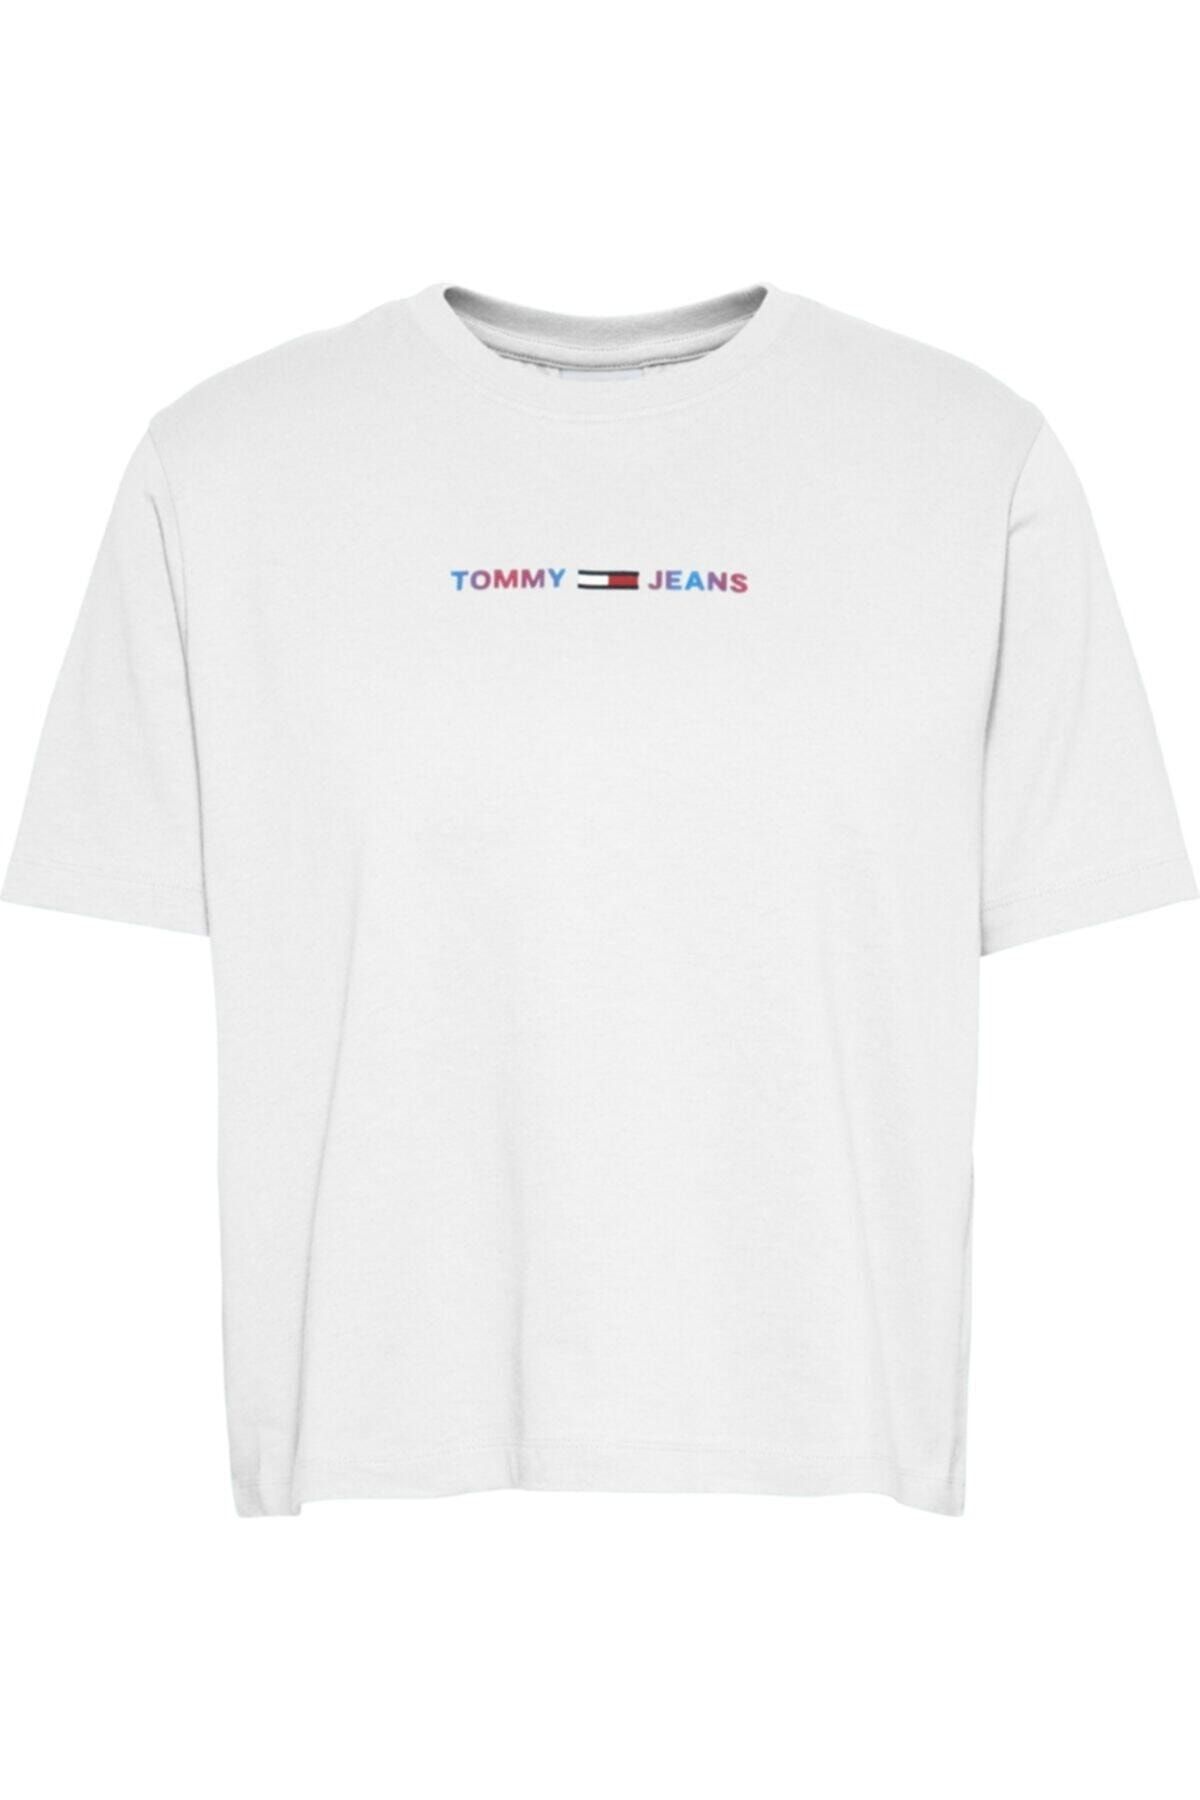 Tommy Hilfiger Crop T-shirt